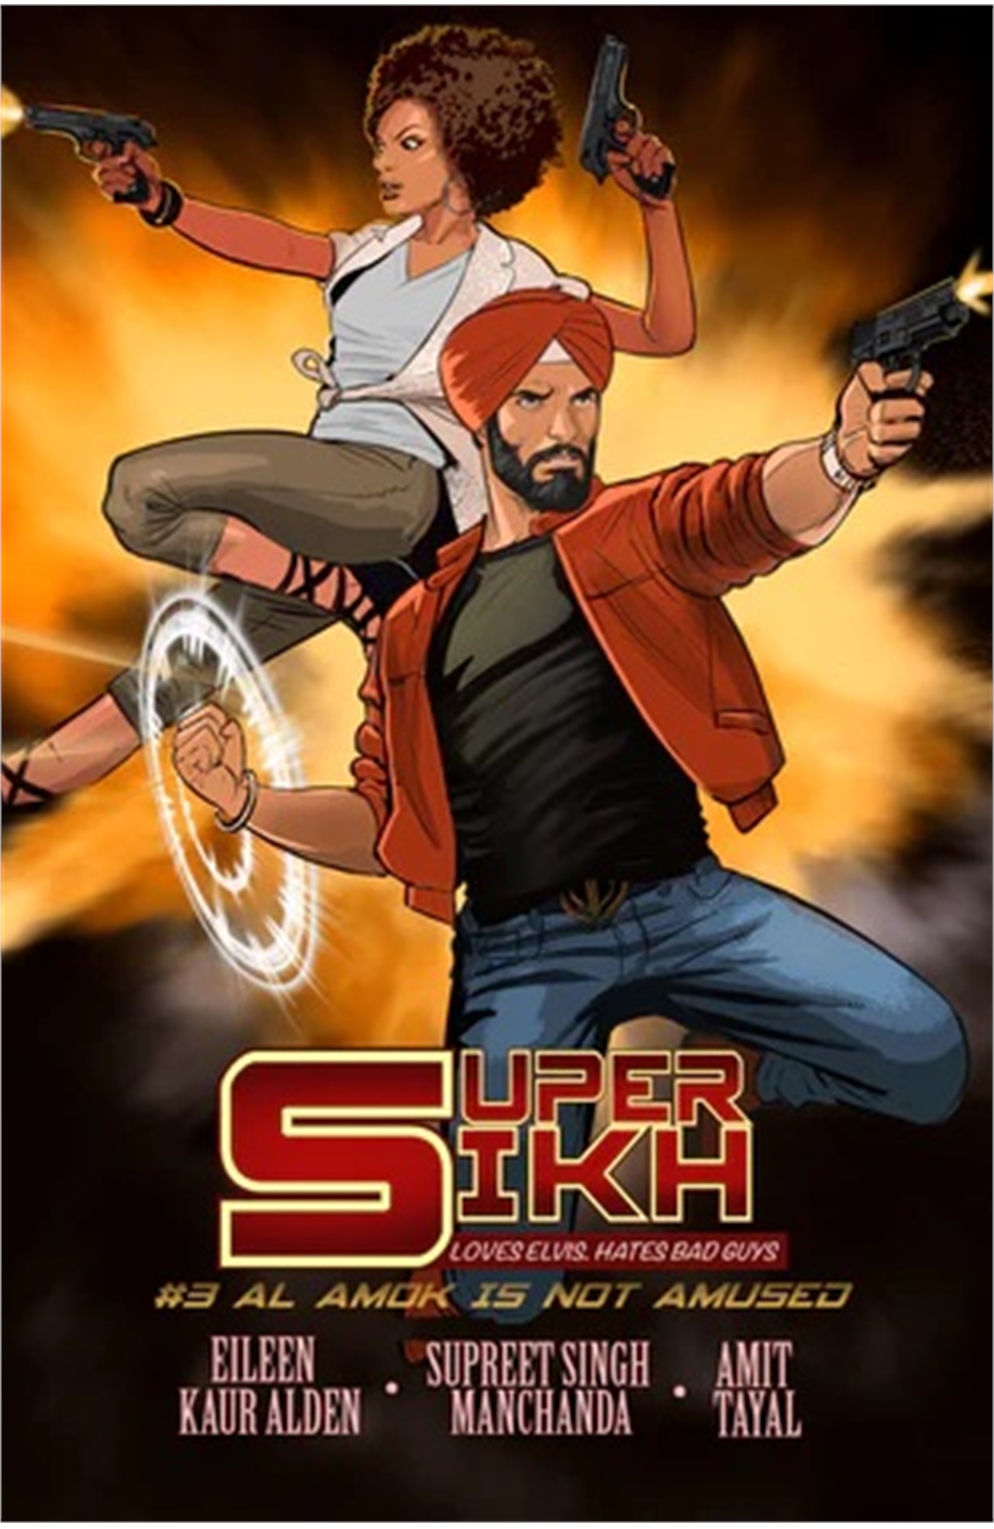 Super Sikh #3